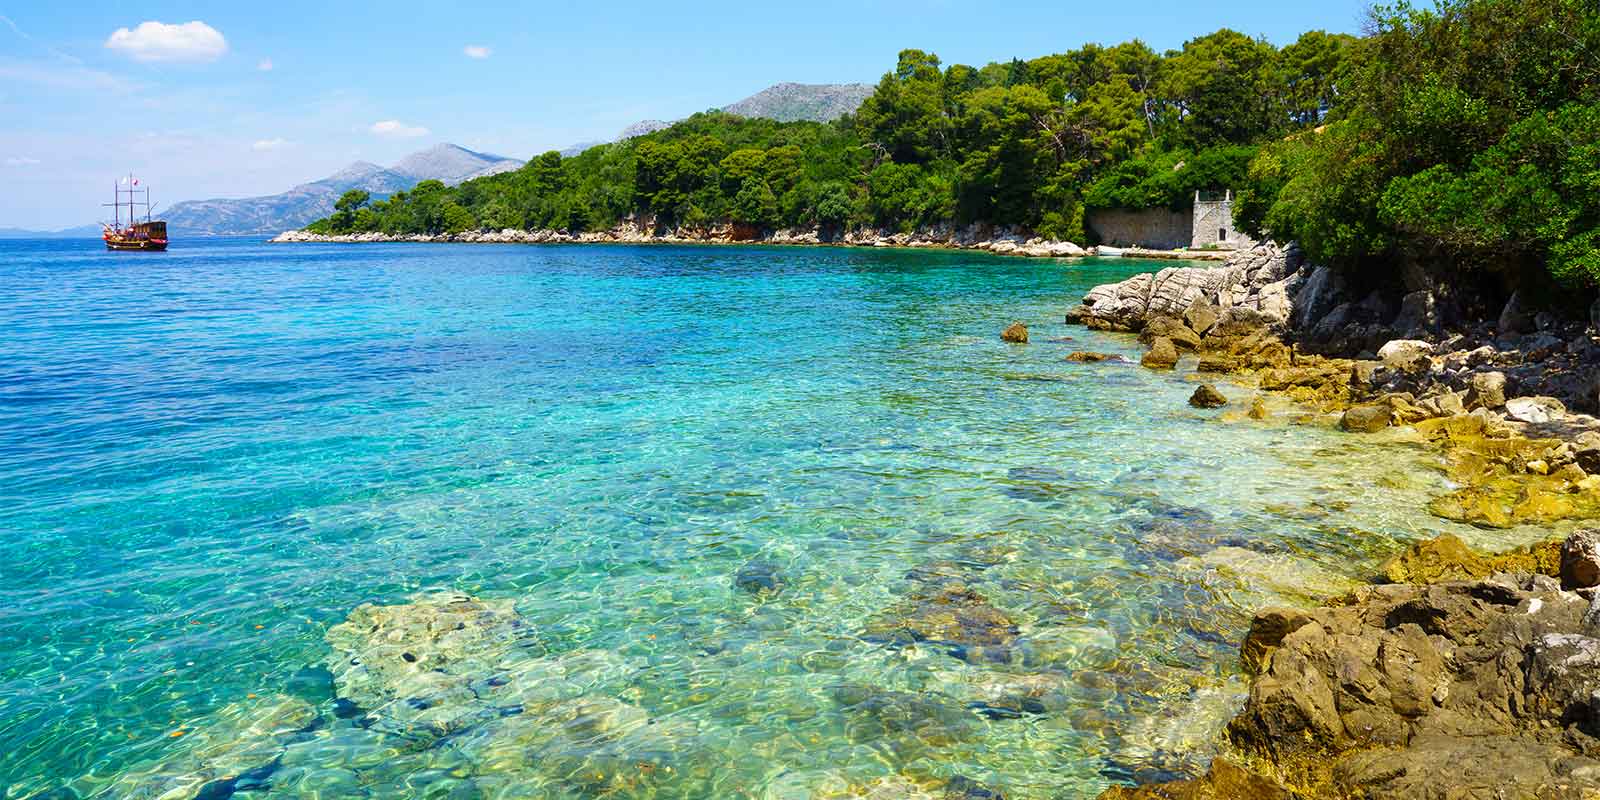 Coastline of Kolocep Island, one of the Elaphiti islands in Croatia